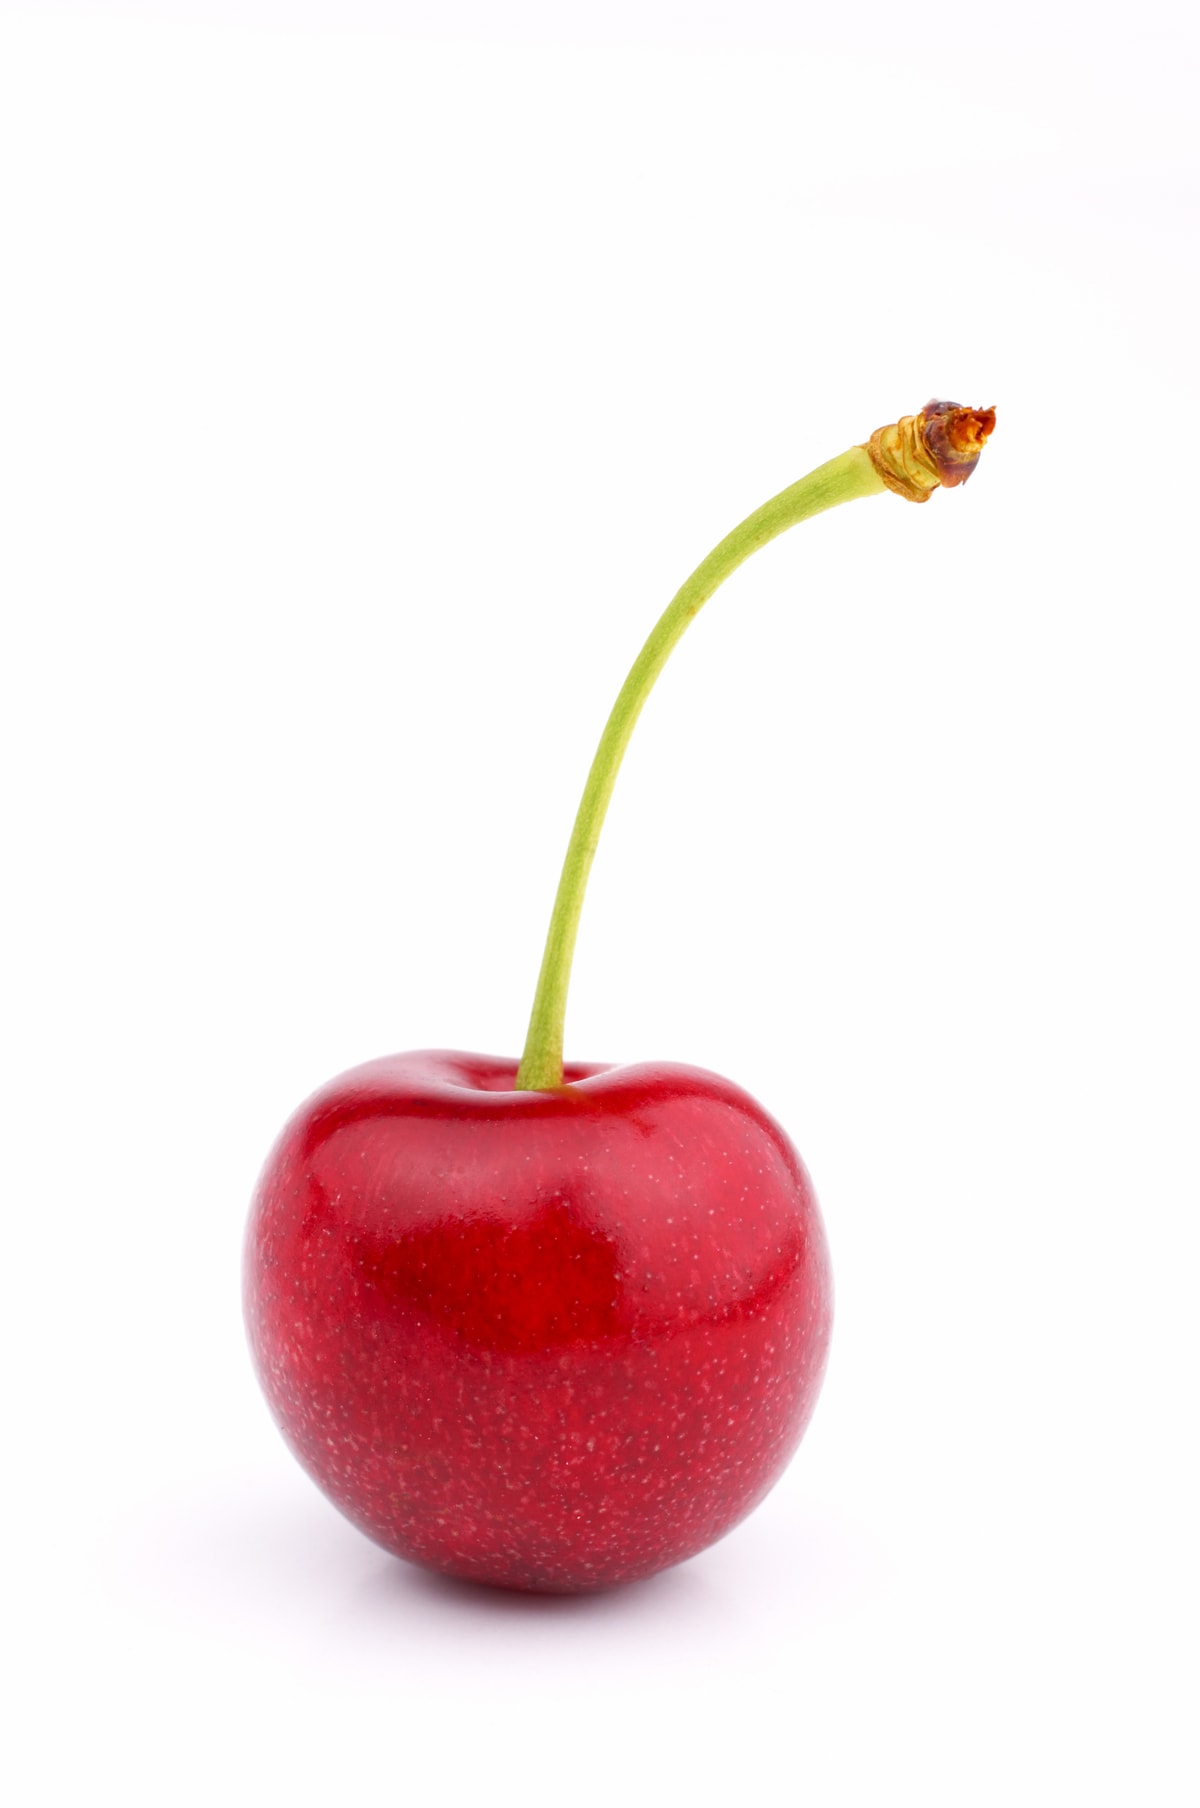 Why like cherries Healthy Guide